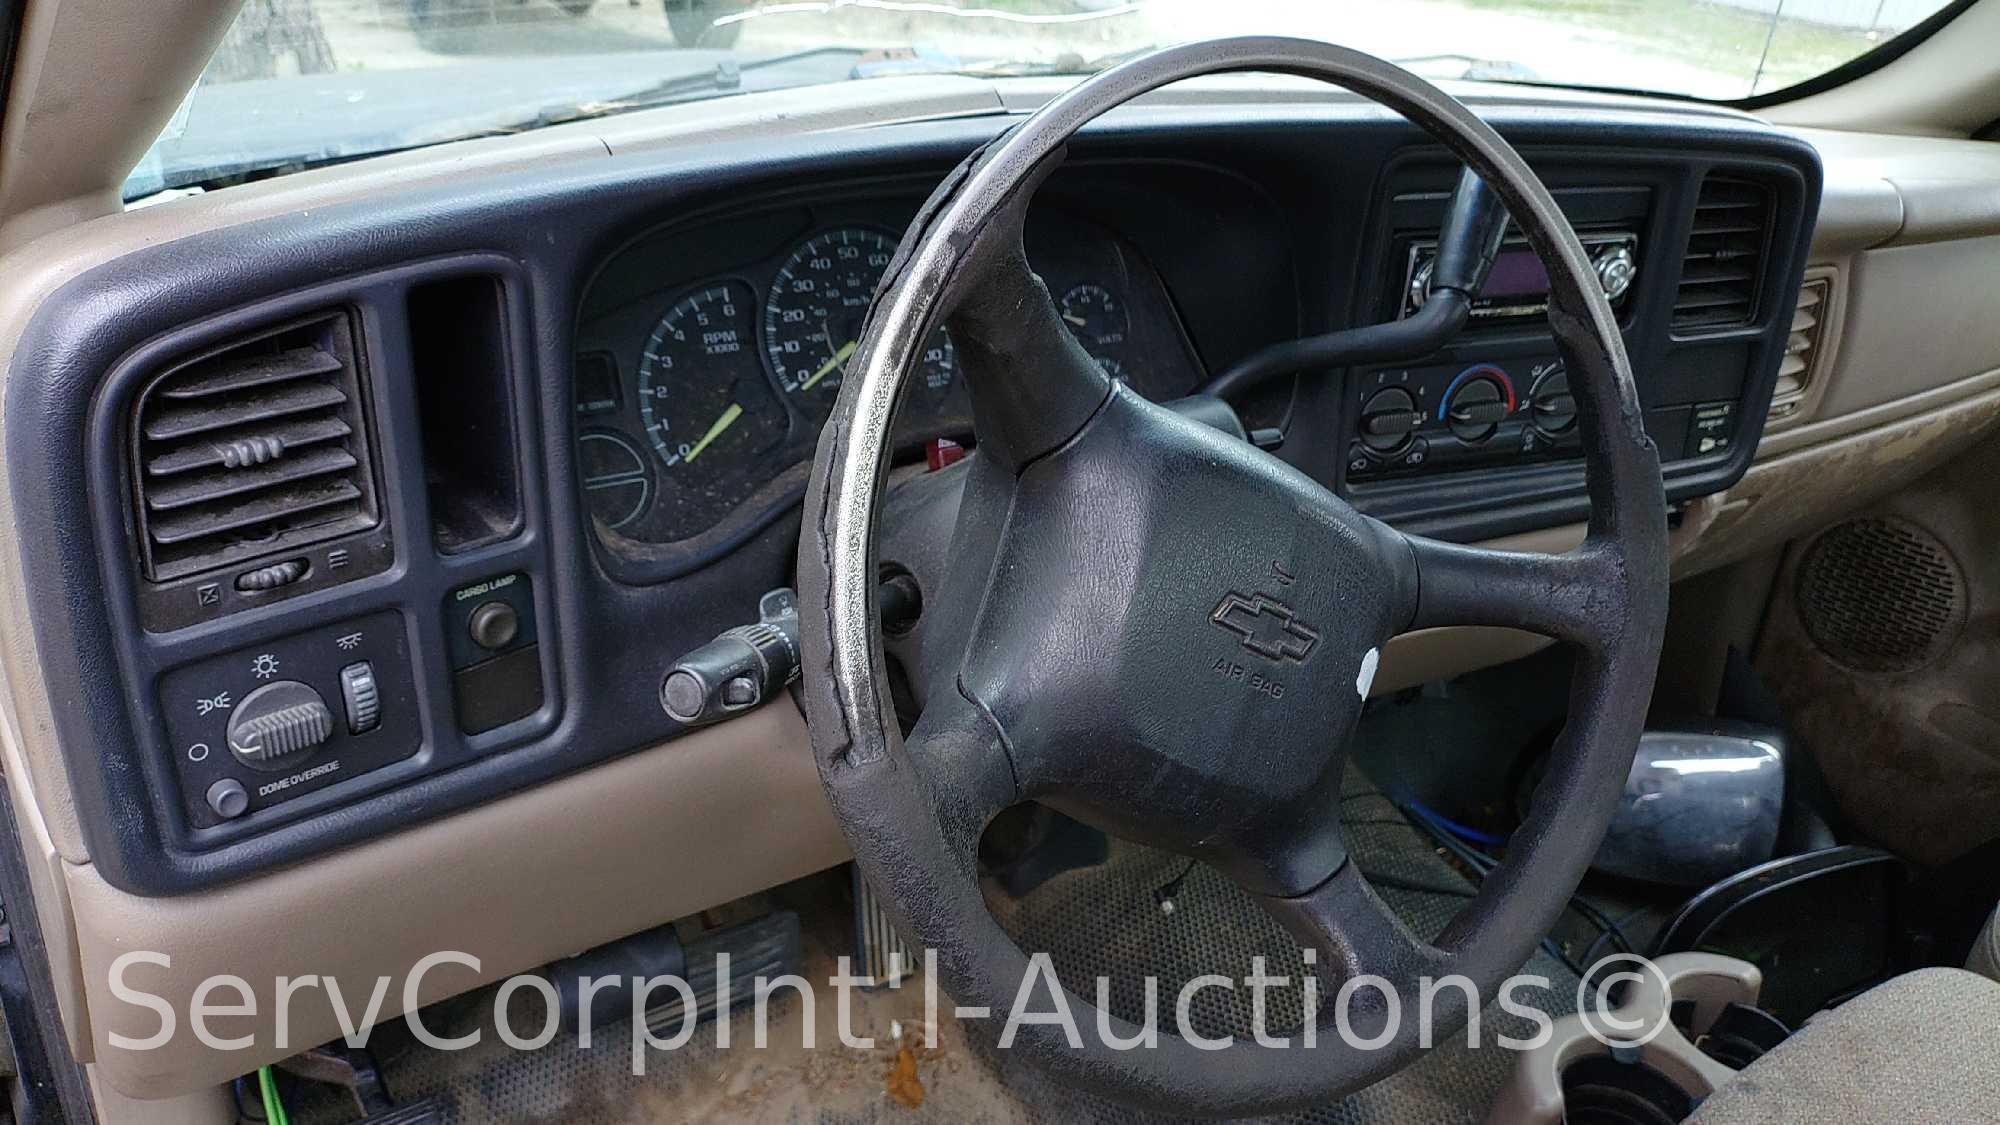 2001 Chevrolet Silverado Pickup Truck, VIN # 1GCEC14W71Z156860